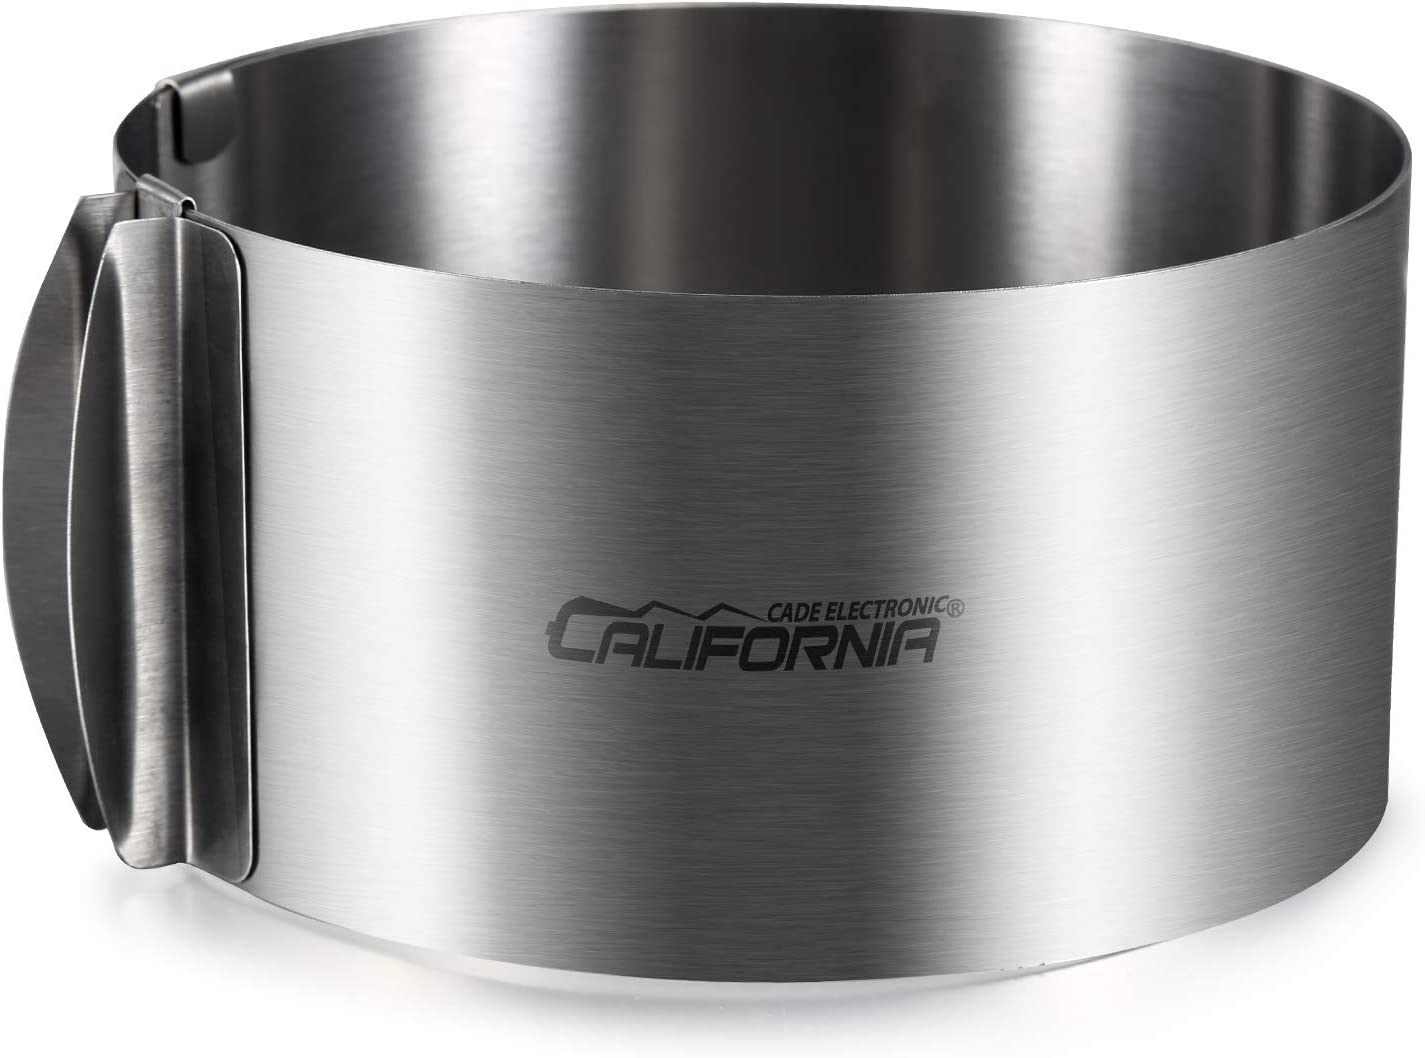 CALIFORNIA CADE ELECTRONIC Adjustable Size Cake Ring